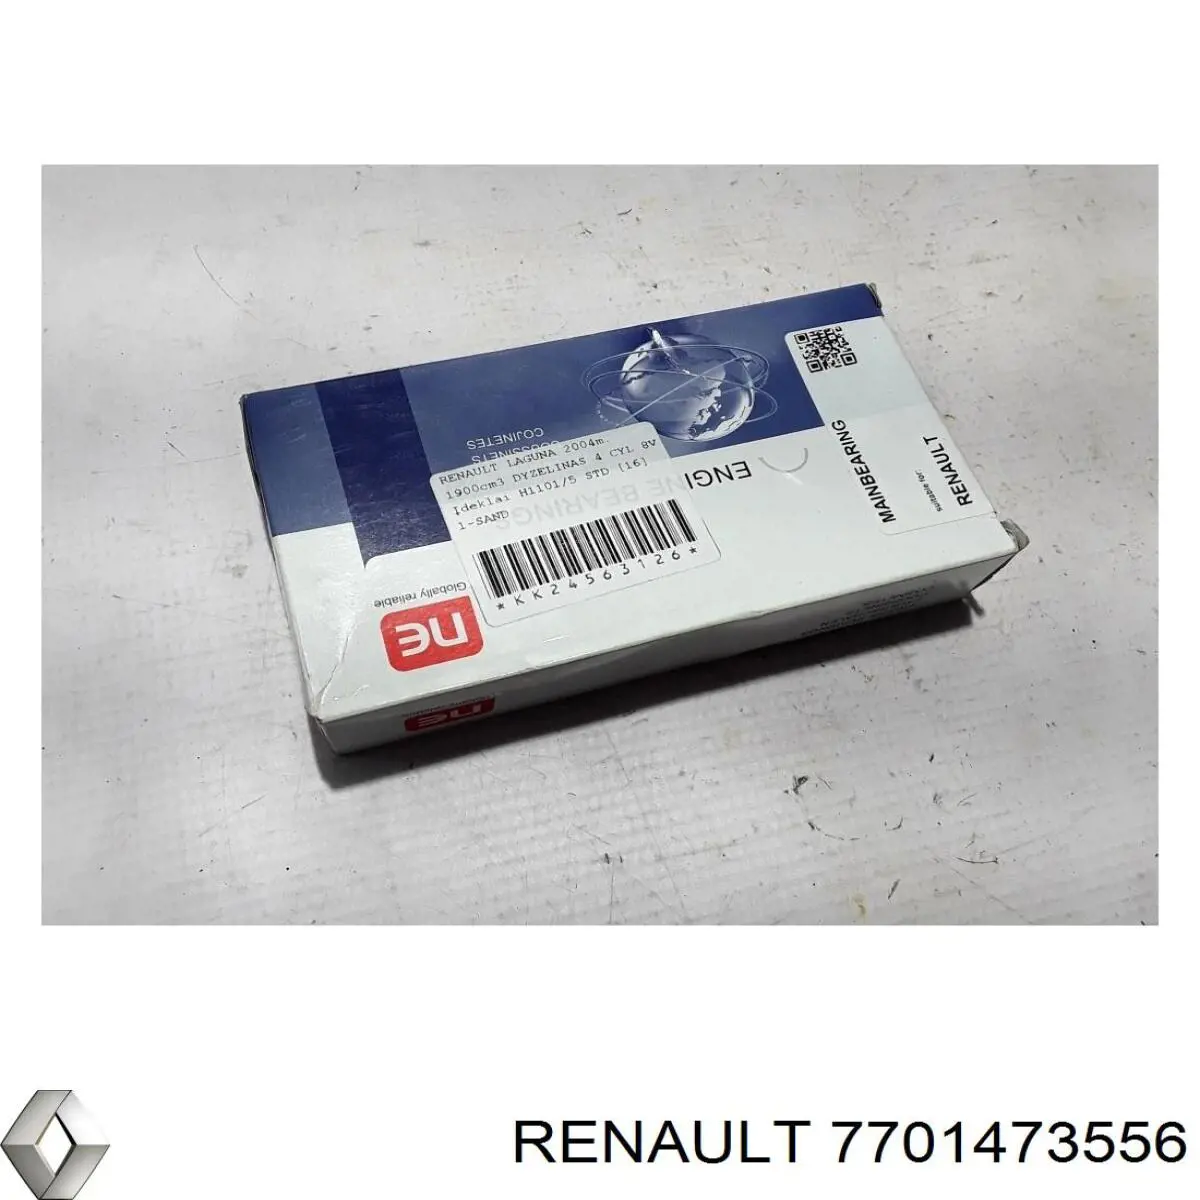 7701473556 Renault (RVI) вкладыши коленвала коренные, комплект, стандарт (std)